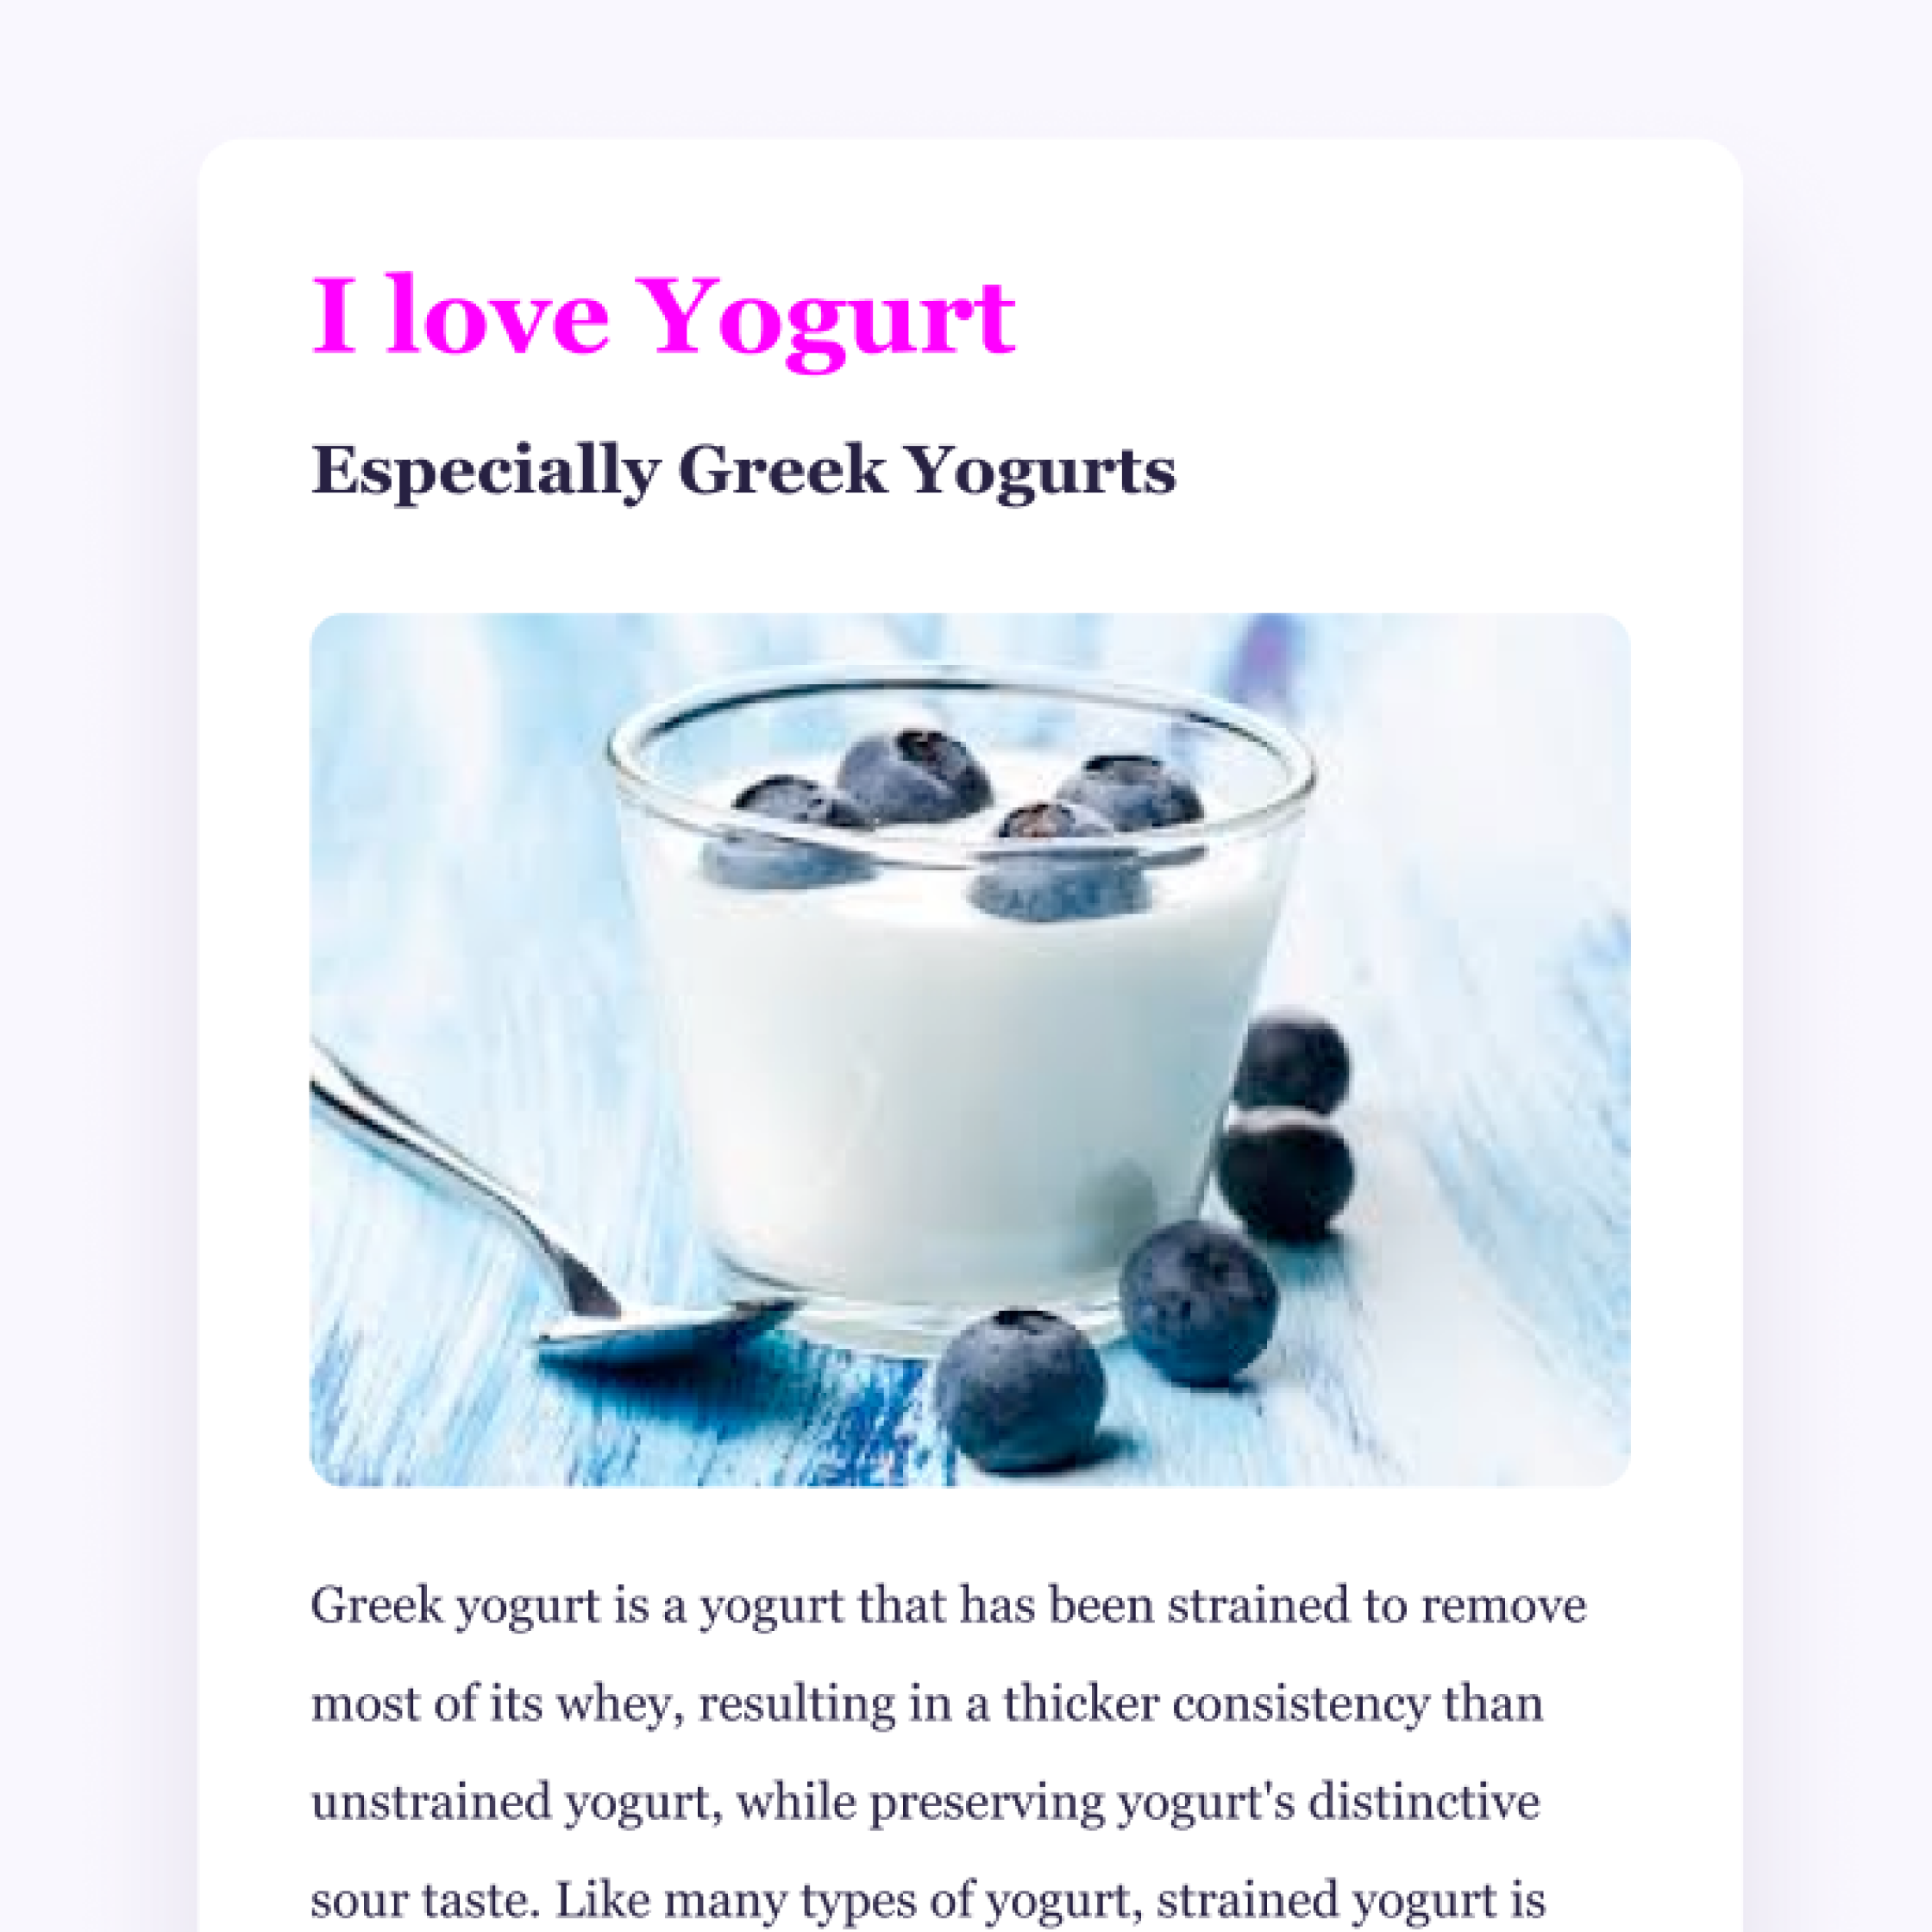 Yogurt my favorite snack